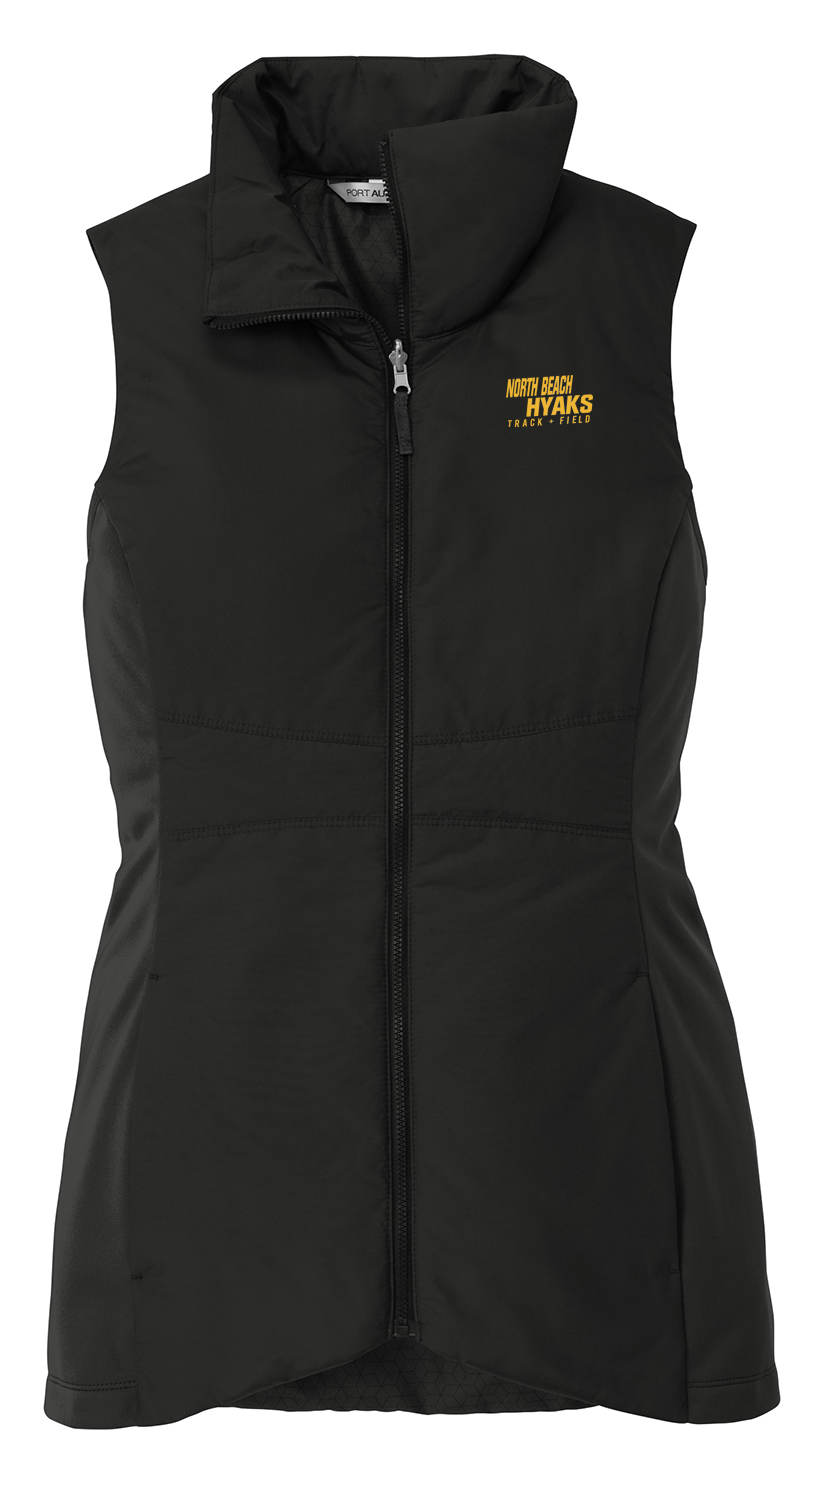 North Beach Track & Field Women's Vest